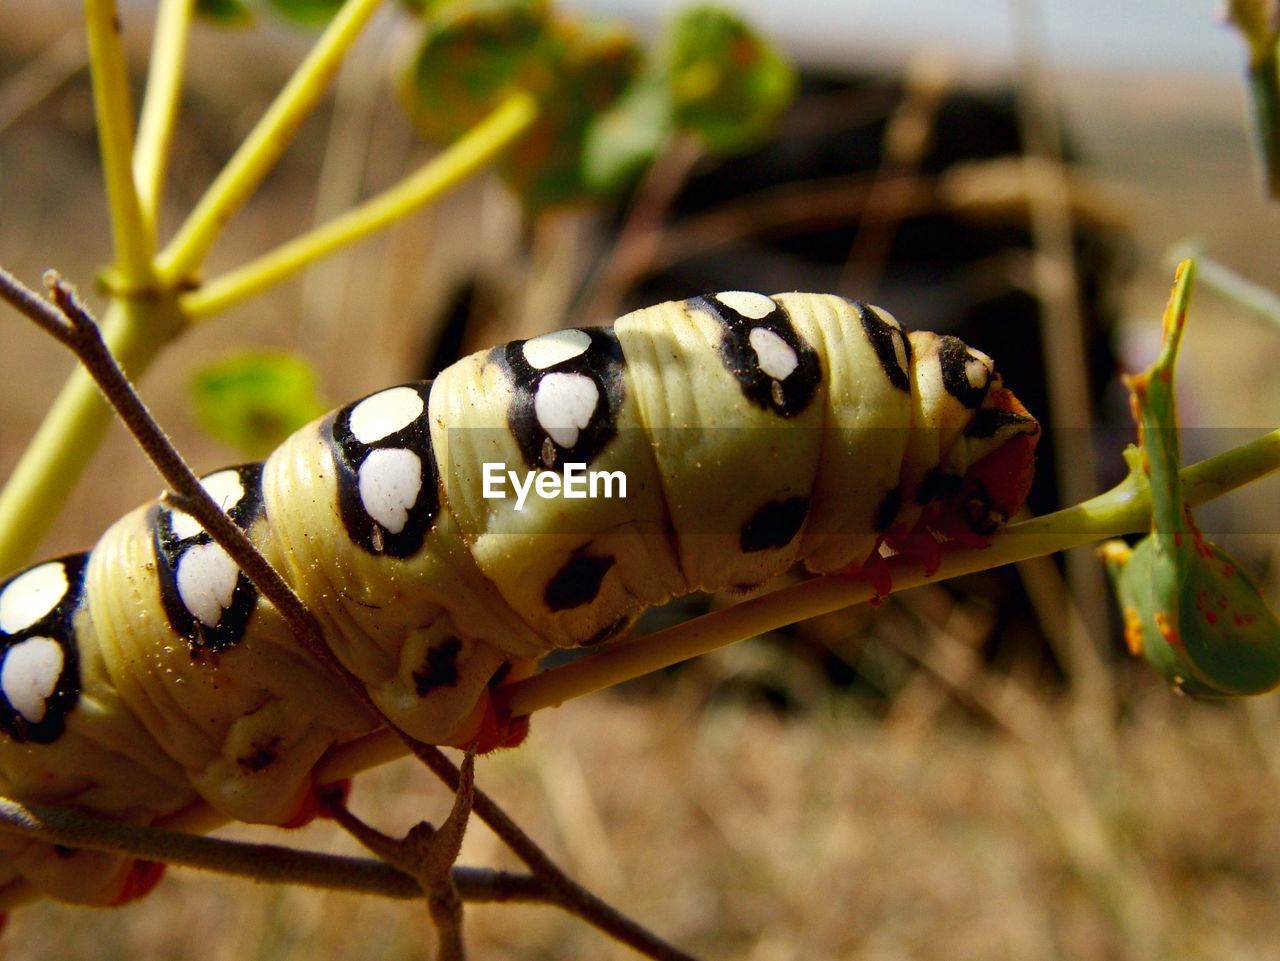 Close-up of caterpillar on stem